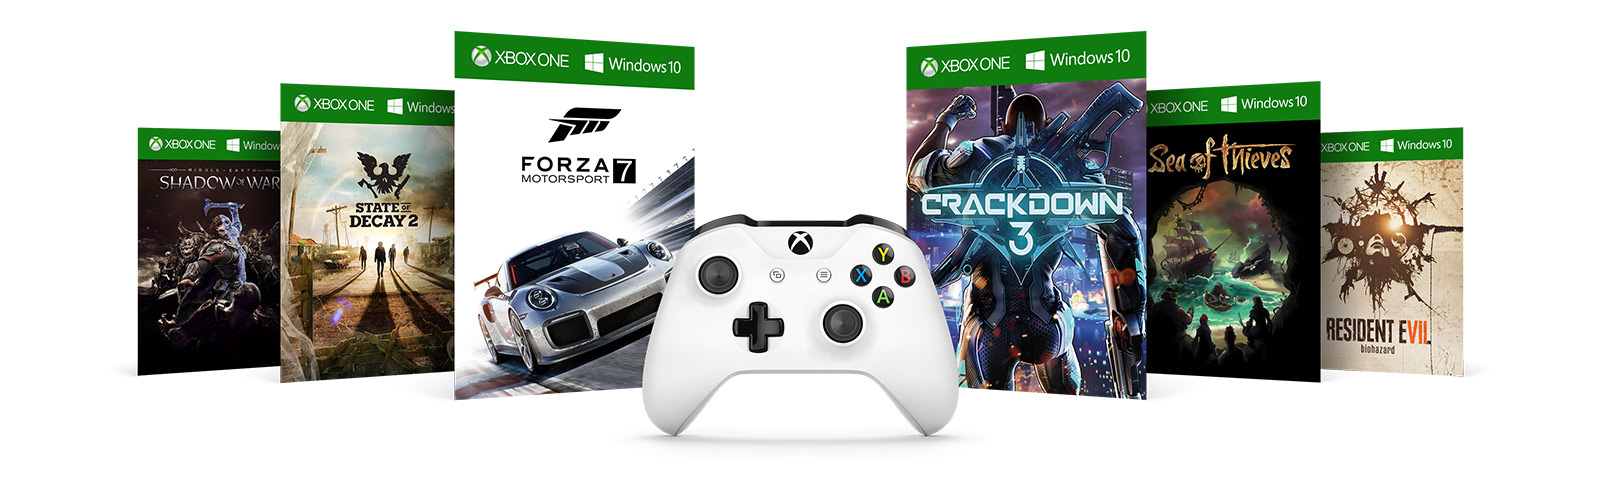 Juegos Xbox Play Anywhere para Xbox One y Windows 10